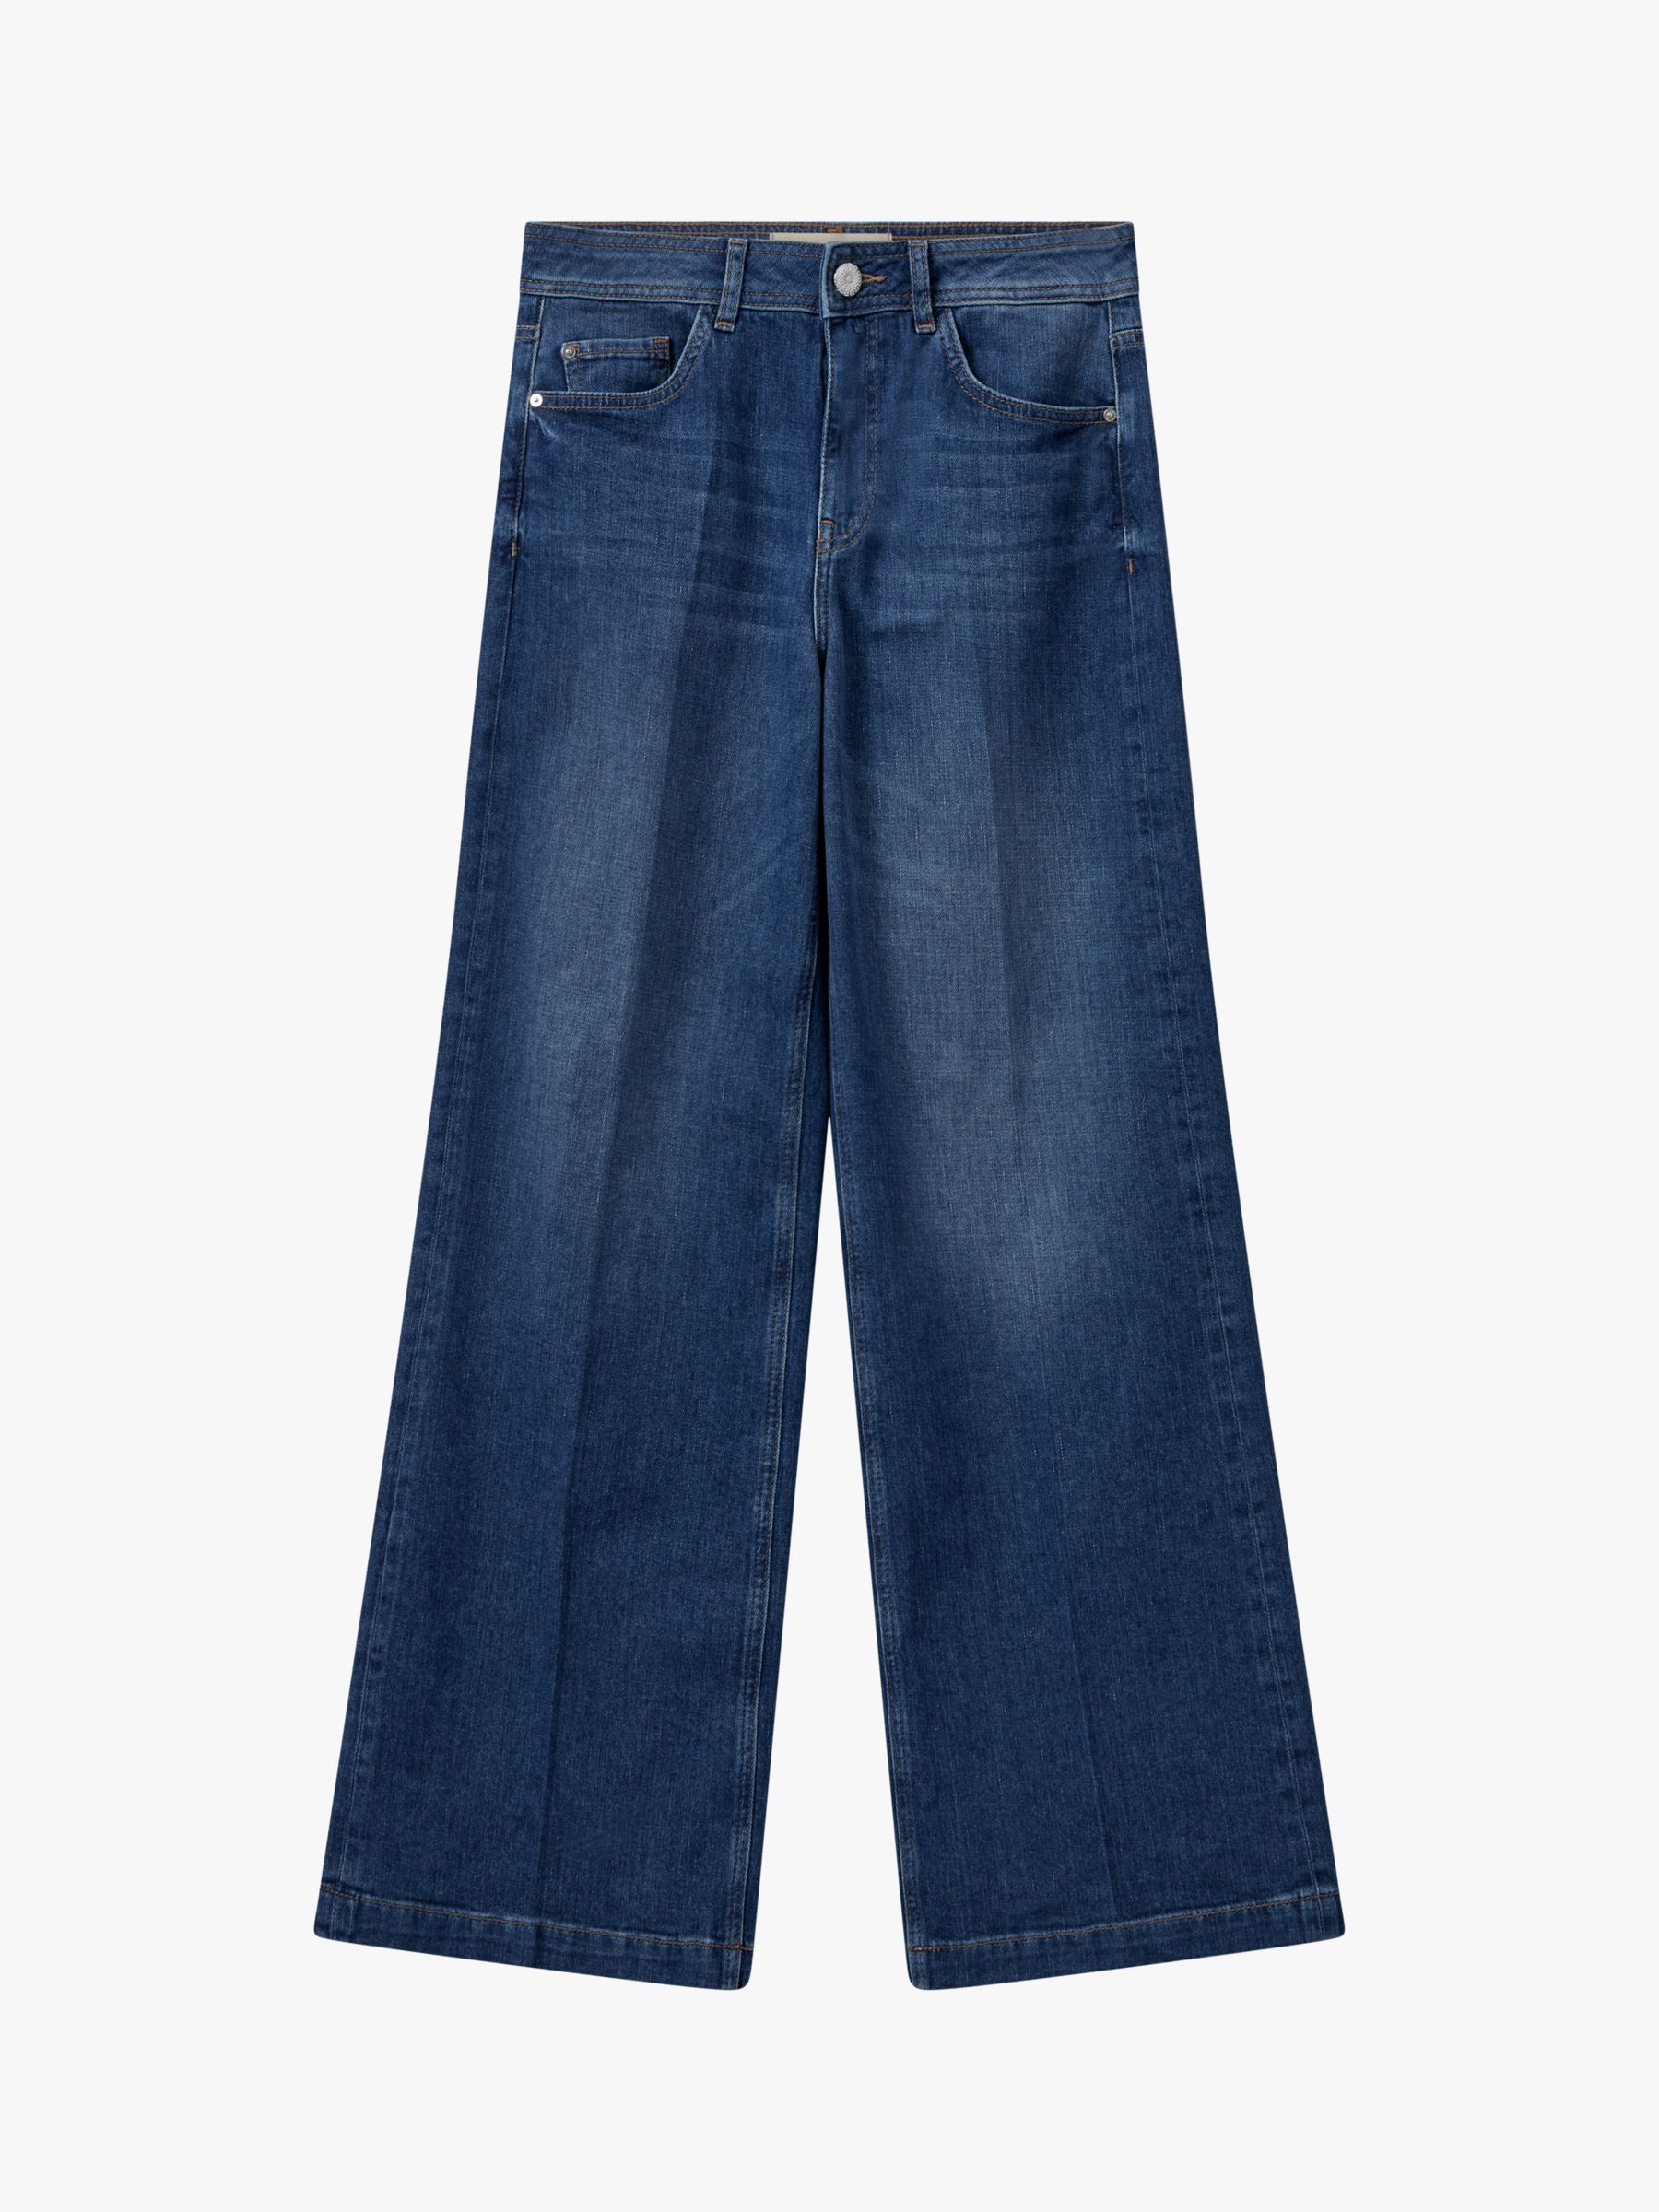 MOS MOSH Dara Stina Flared Jeans, Dark Blue, 31R